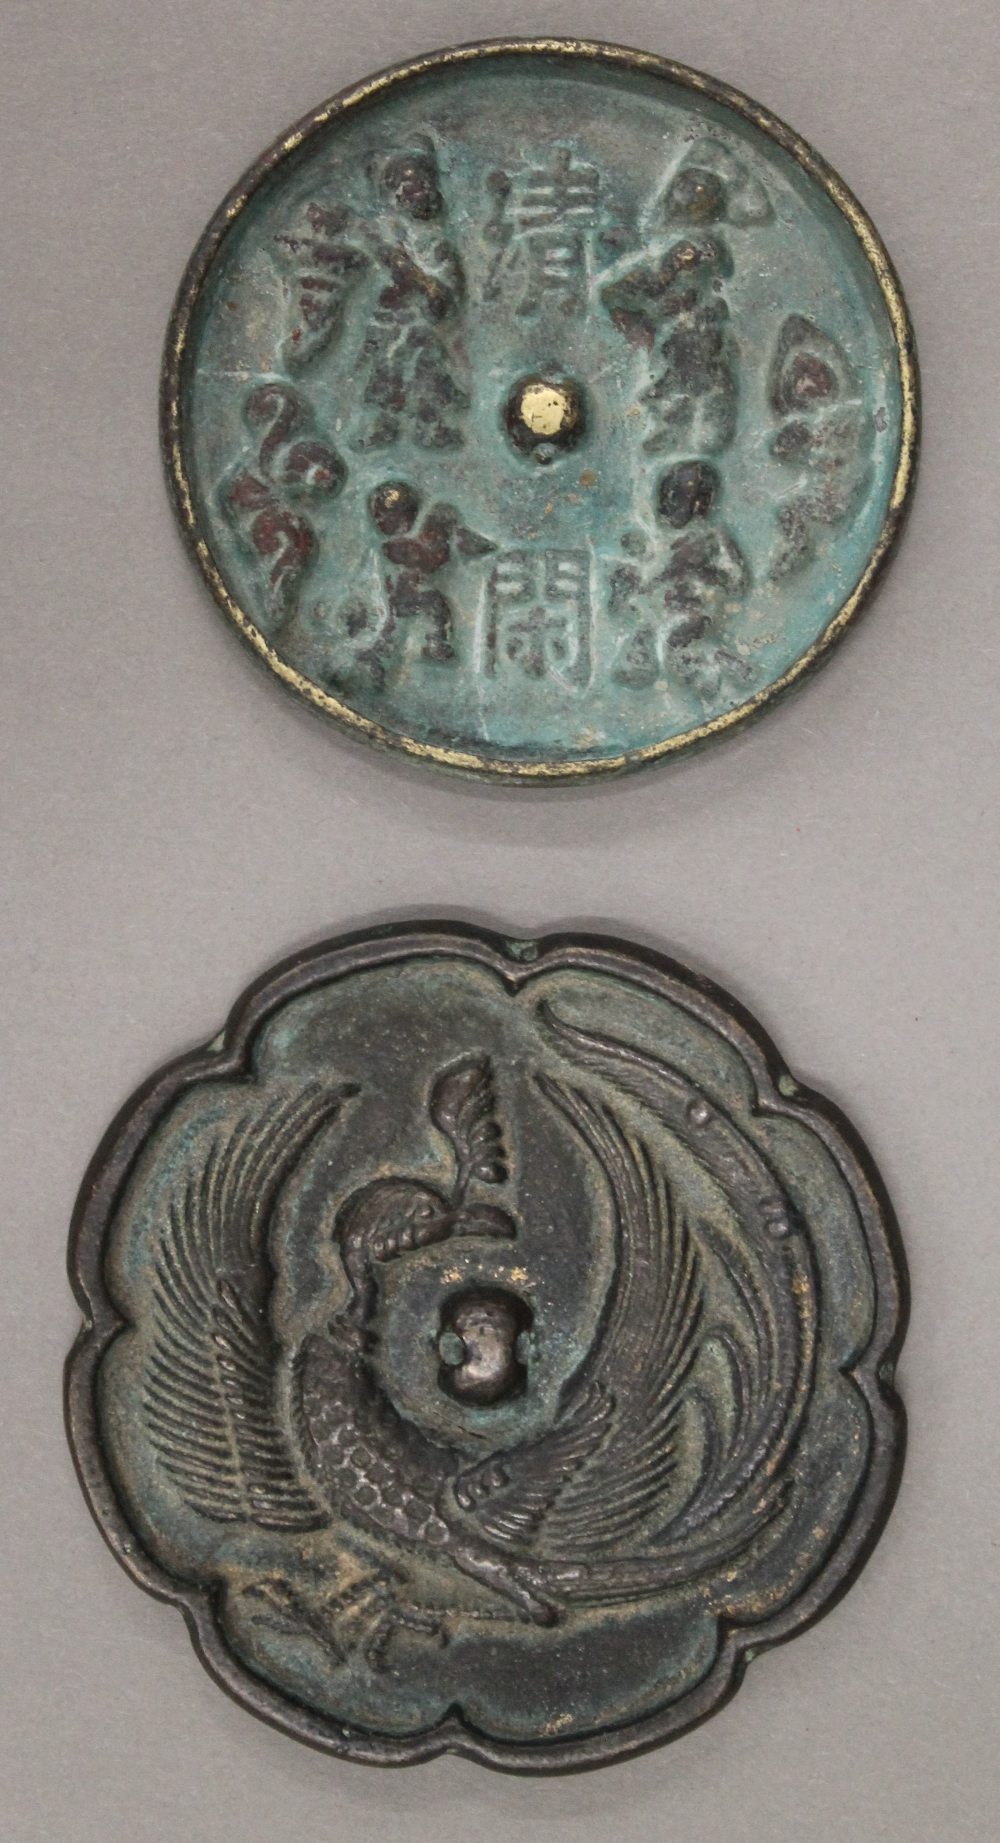 Two Chinese bronze mirrors. Larger 8 cm diameter, smaller 7 cm diameter.